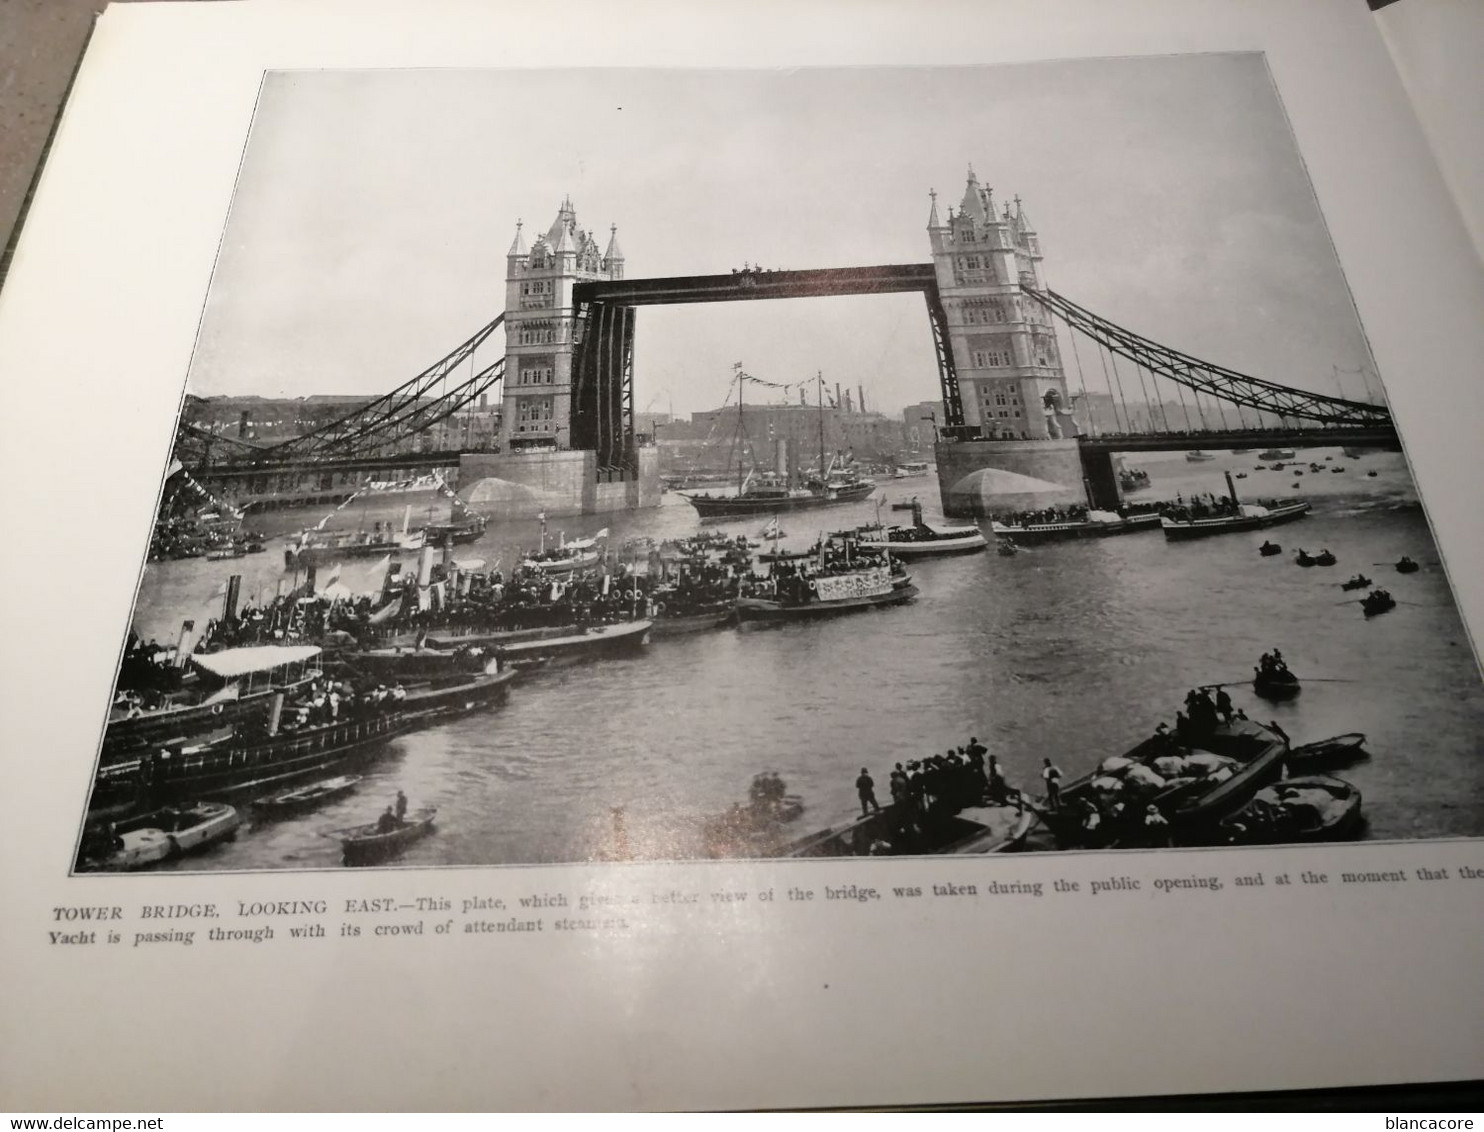 The Descriptive Album Of London A Pictorial Guide Book Vers 1900 / 108 Views / TOP - Photographie